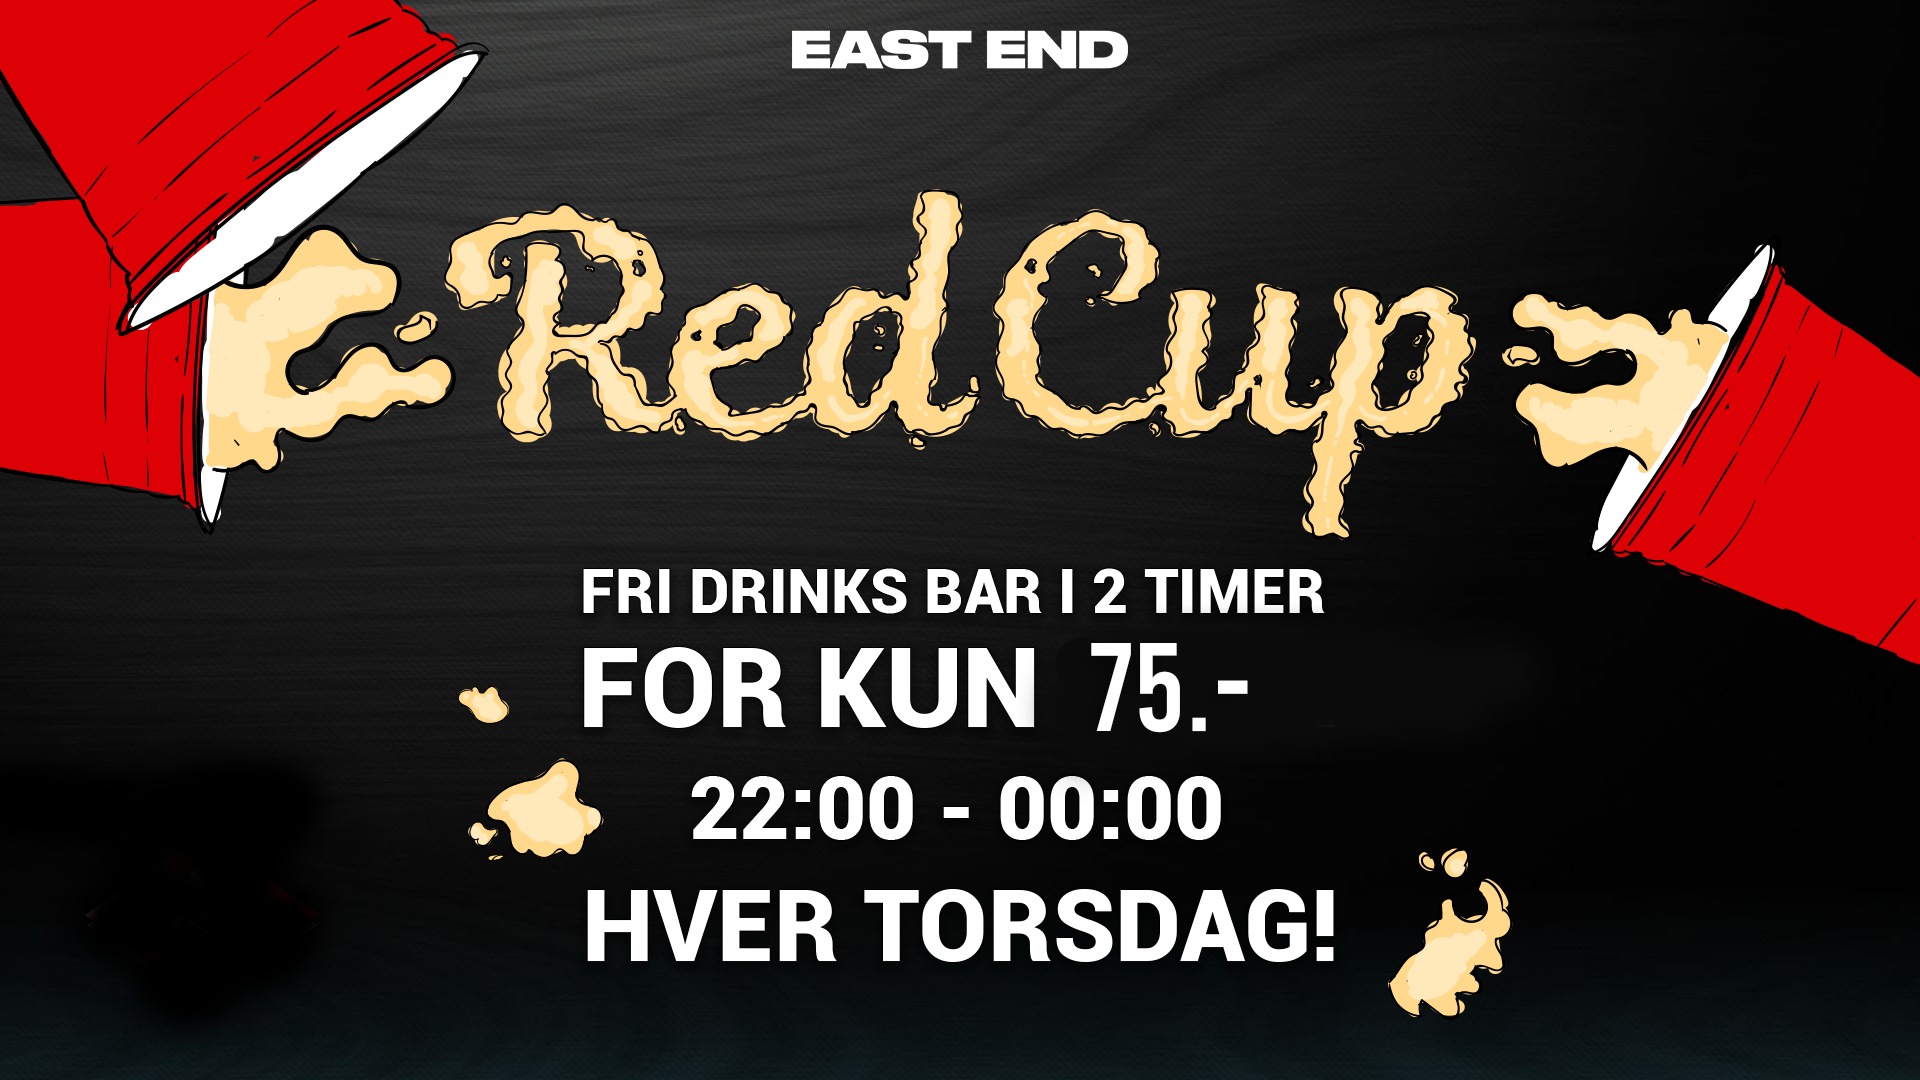 RED CUP PARTY (75 KR. = FRI DRINKS + FRI ENTRÉ) // EAST END